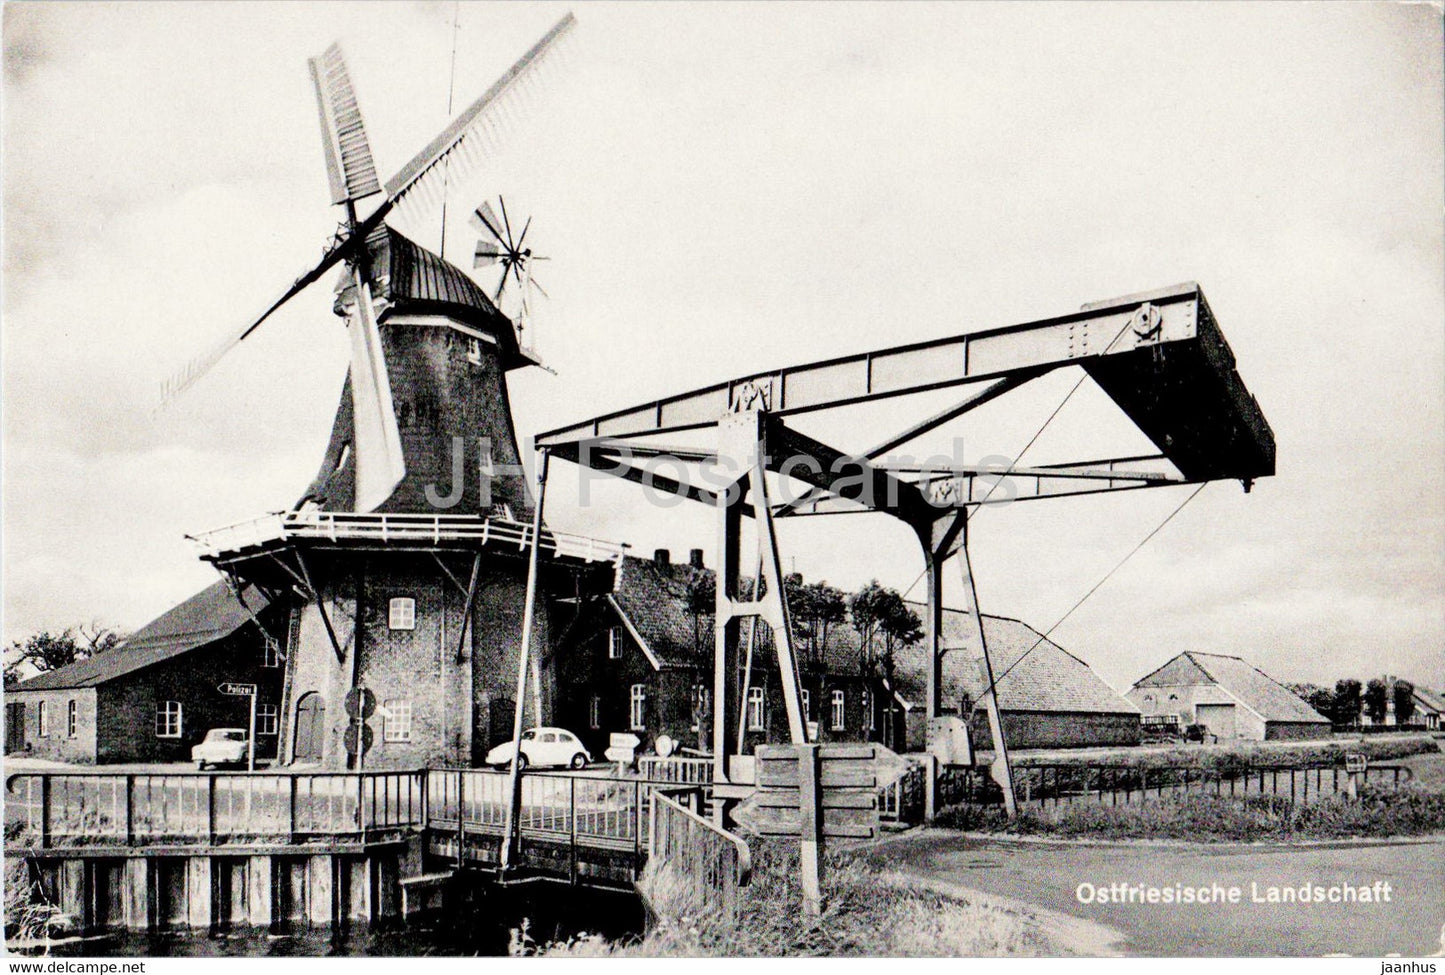 Ostfriesische Landschaft - windmill - old postcard - Germany - used - JH Postcards